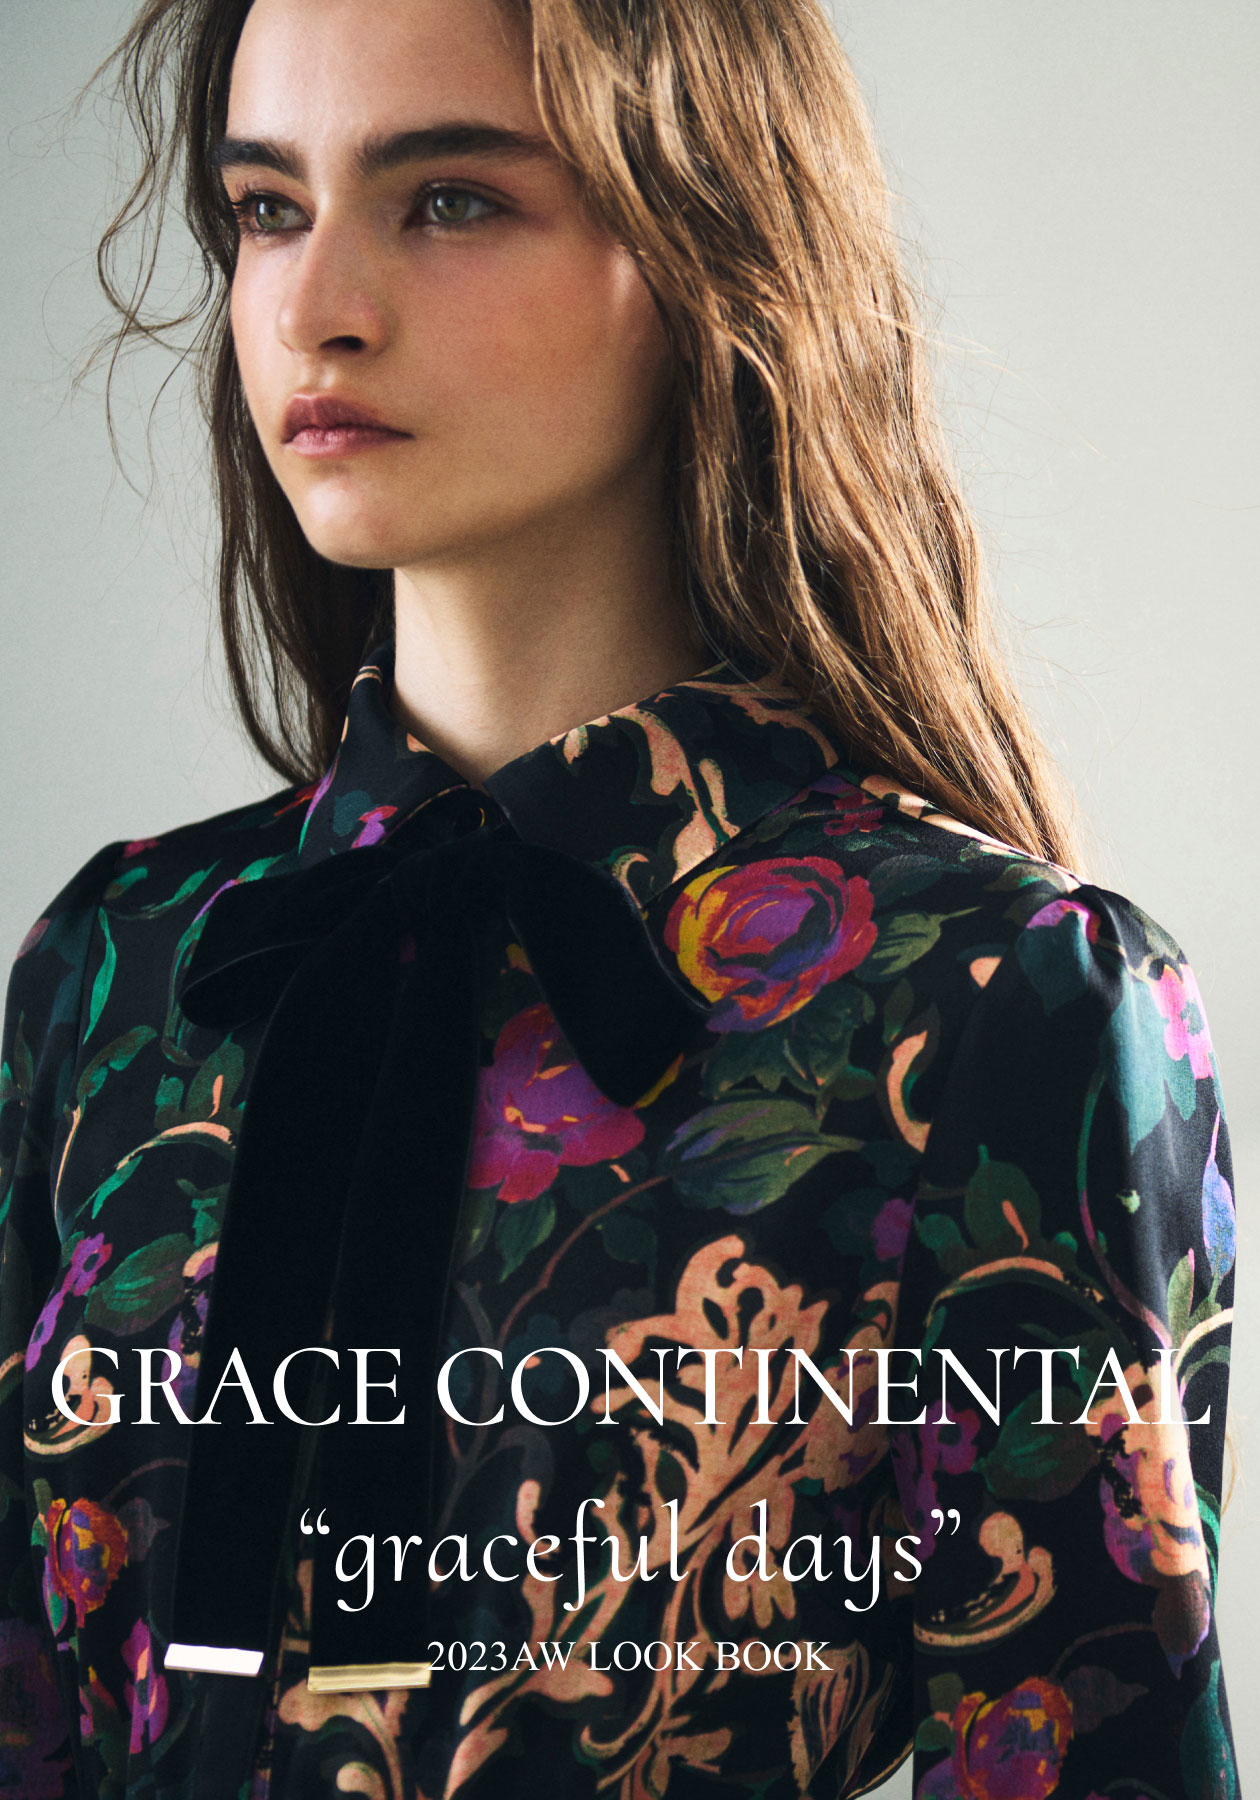 Grace Continental graceful days 2023 AW Lookbook